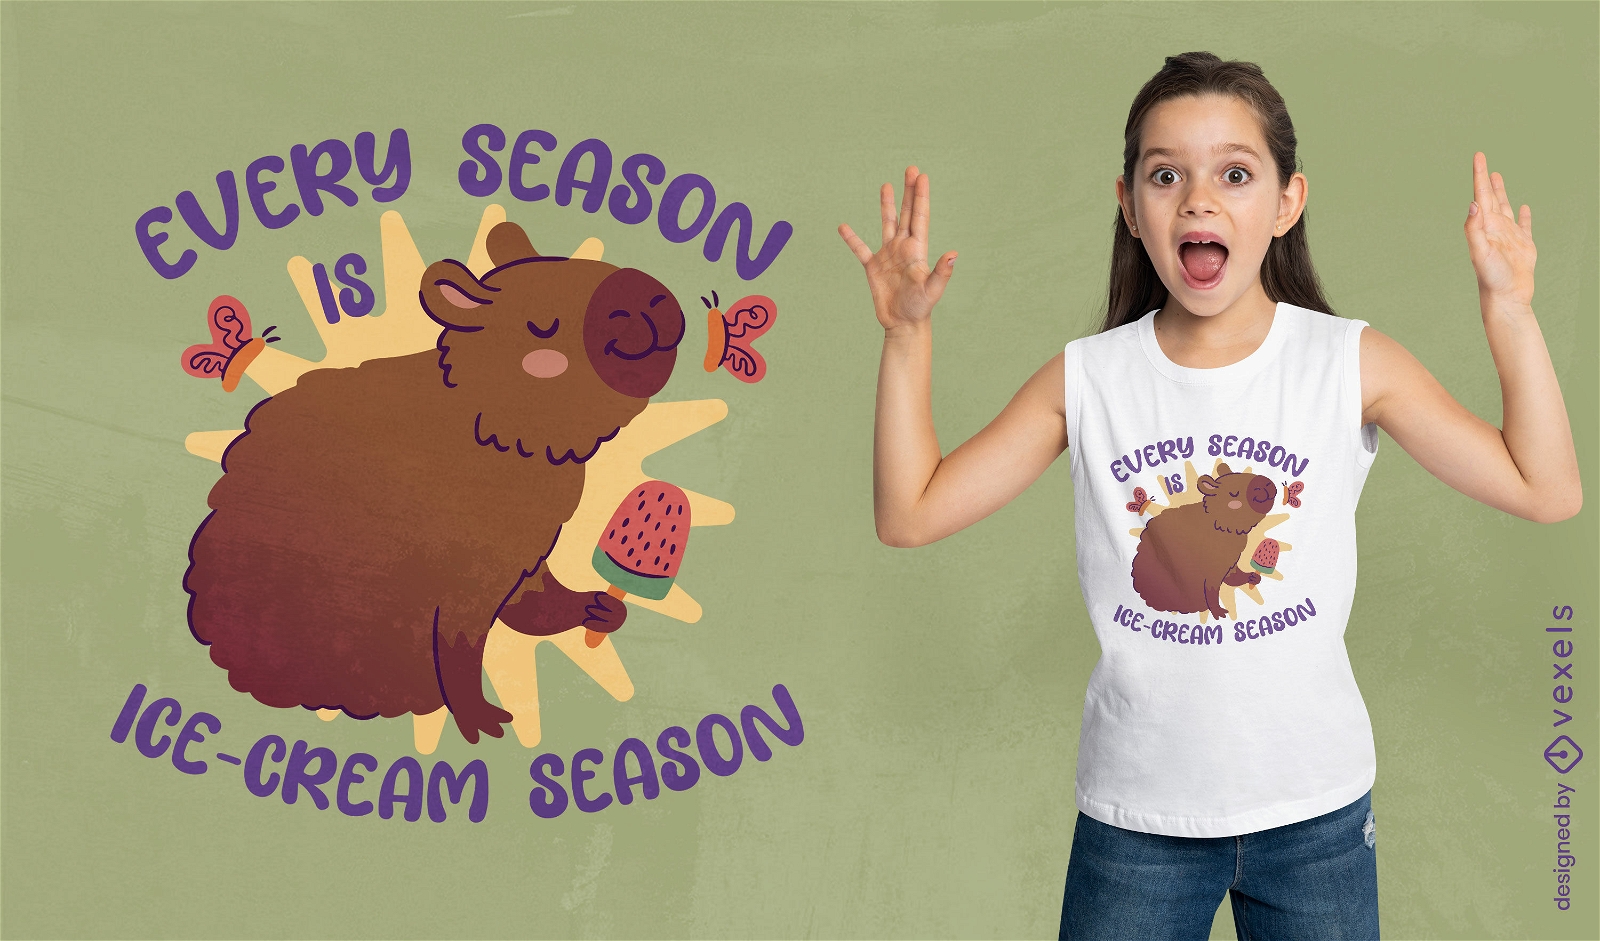 Ice-cream season capybara t-shirt design